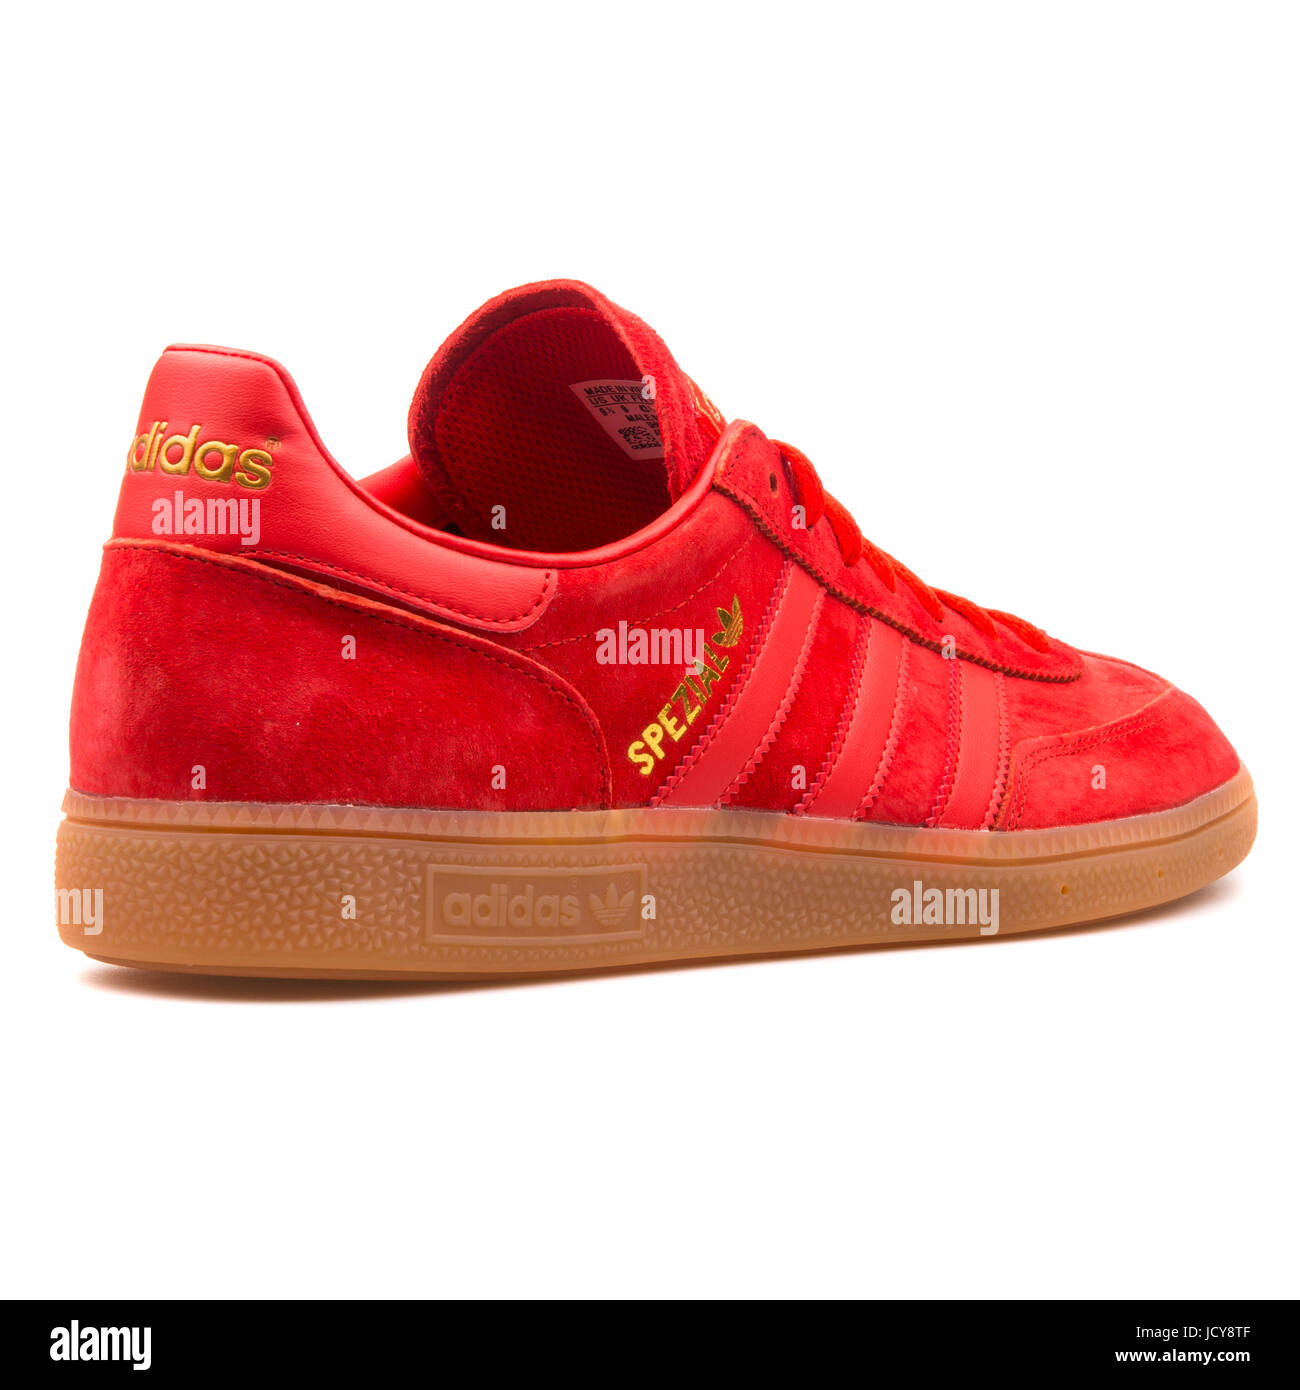 Adidas Spezial Red Men's Sports Shoes - B35209 Stock Photo - Alamy